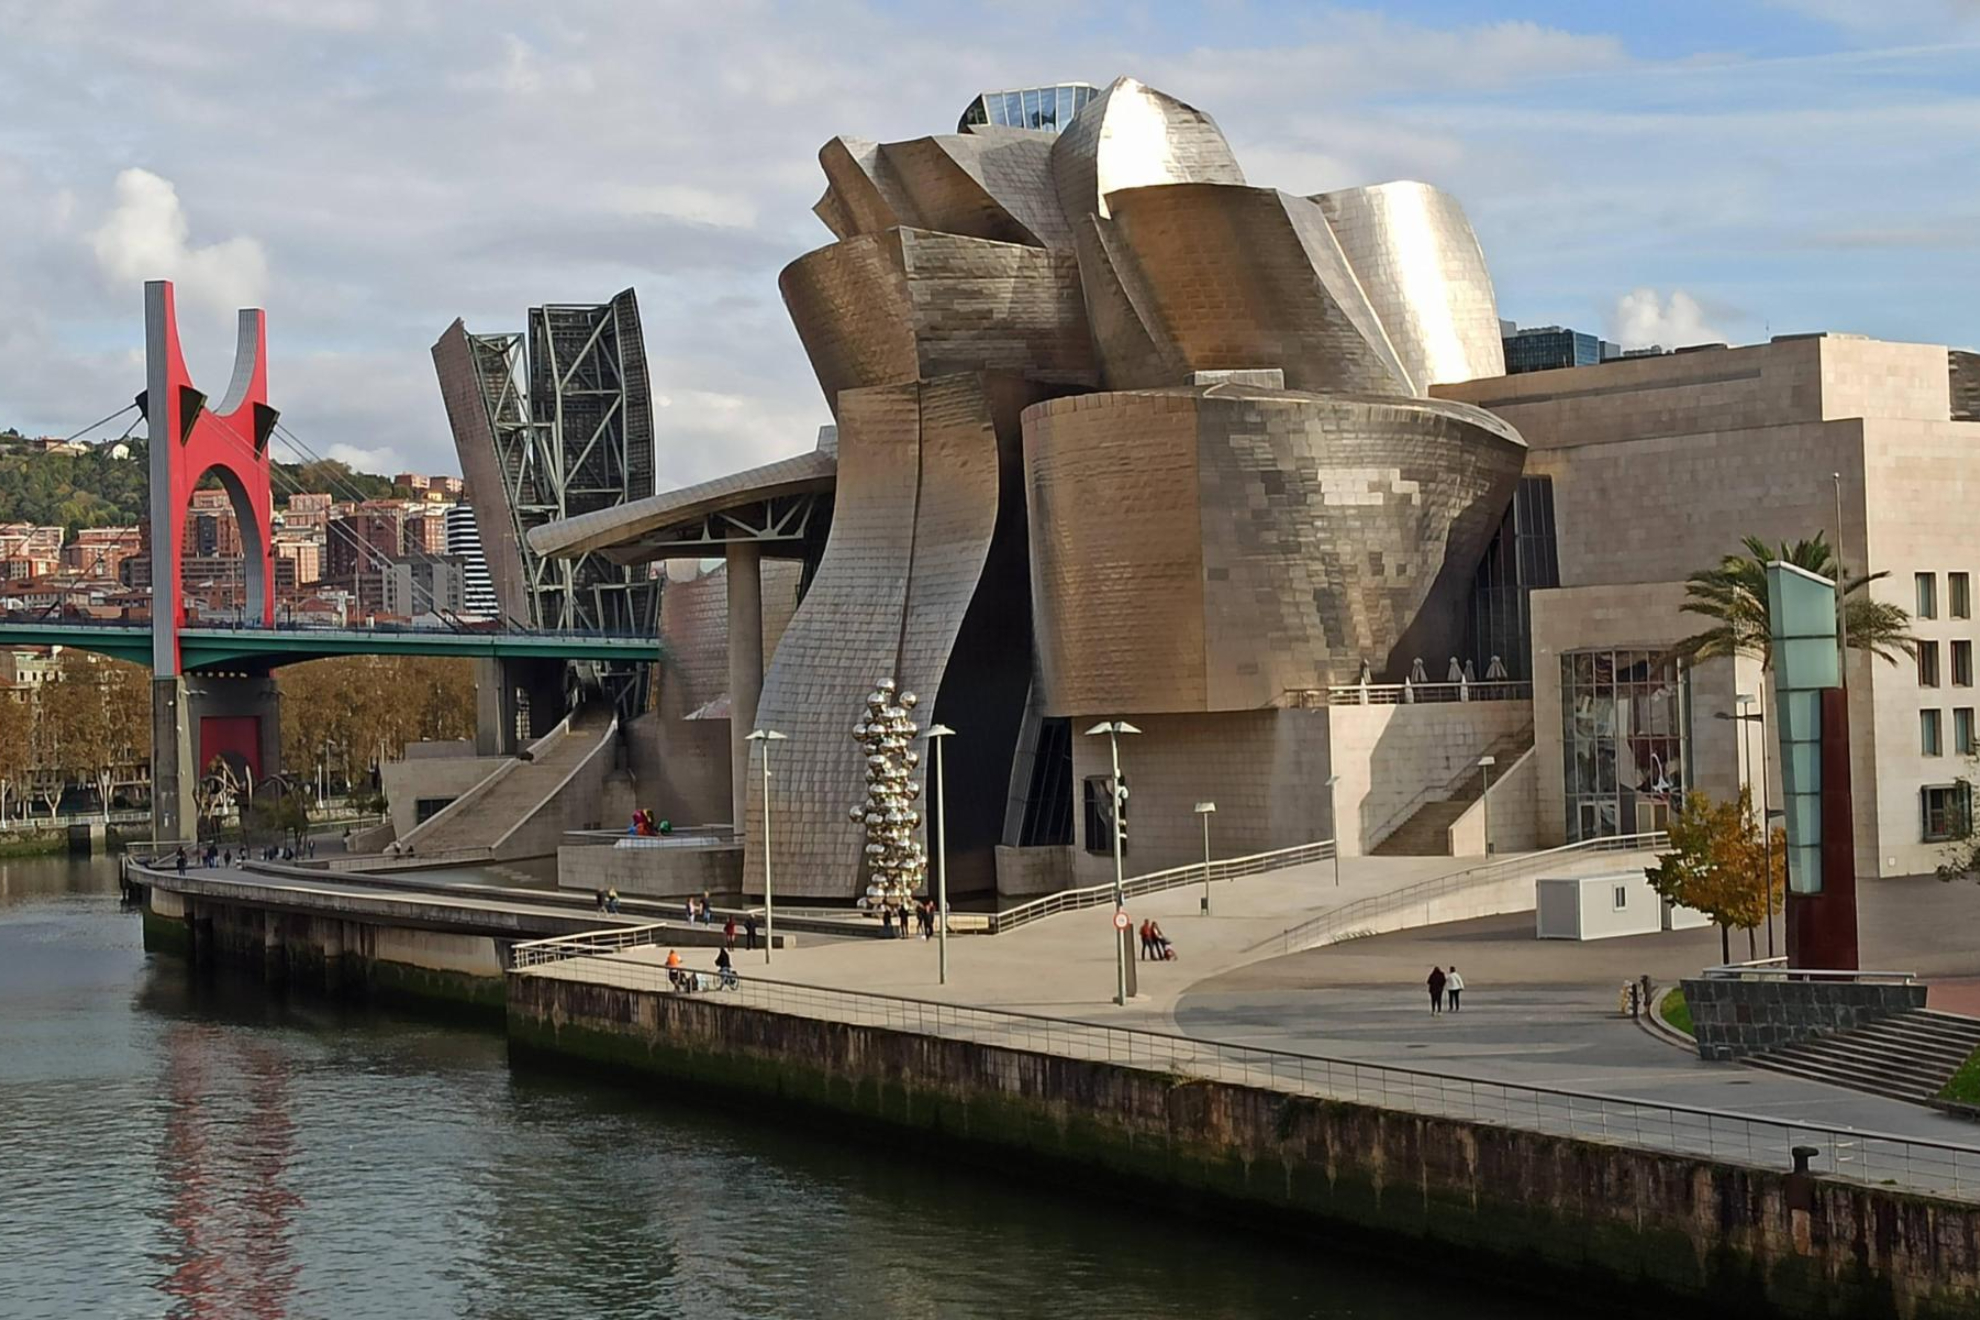 El fen�meno mundial de la meditaci�n urbana llega a Espa�a: Bilbao inaugura el 26 de mayo el primer Slow Sunday